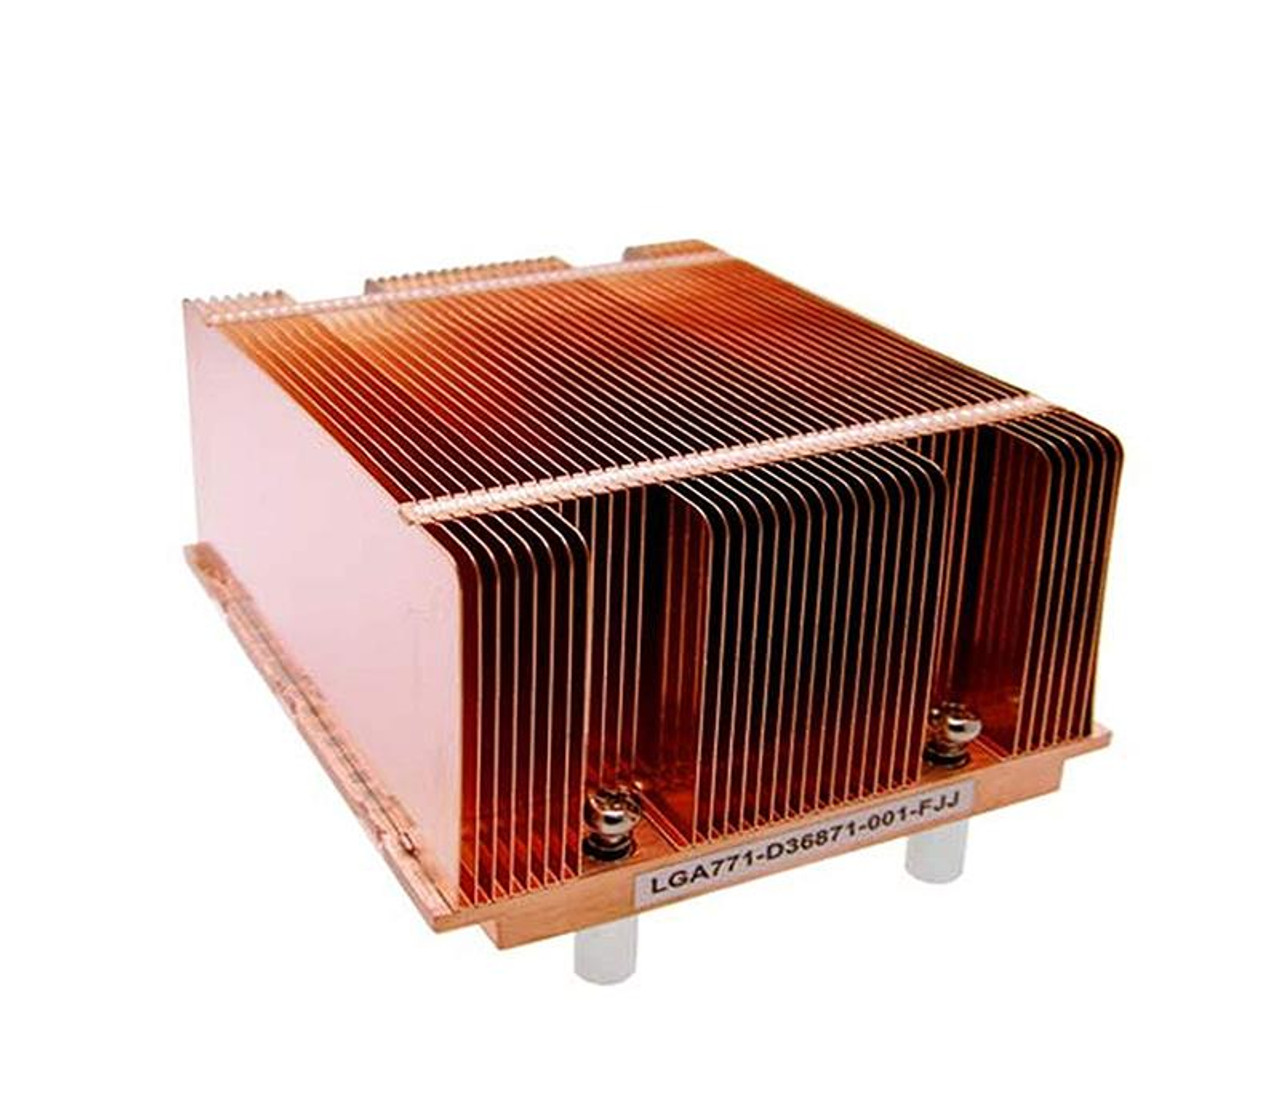 D36871-001 Intel Socket LGA771 2U Copper CPU Heatsink